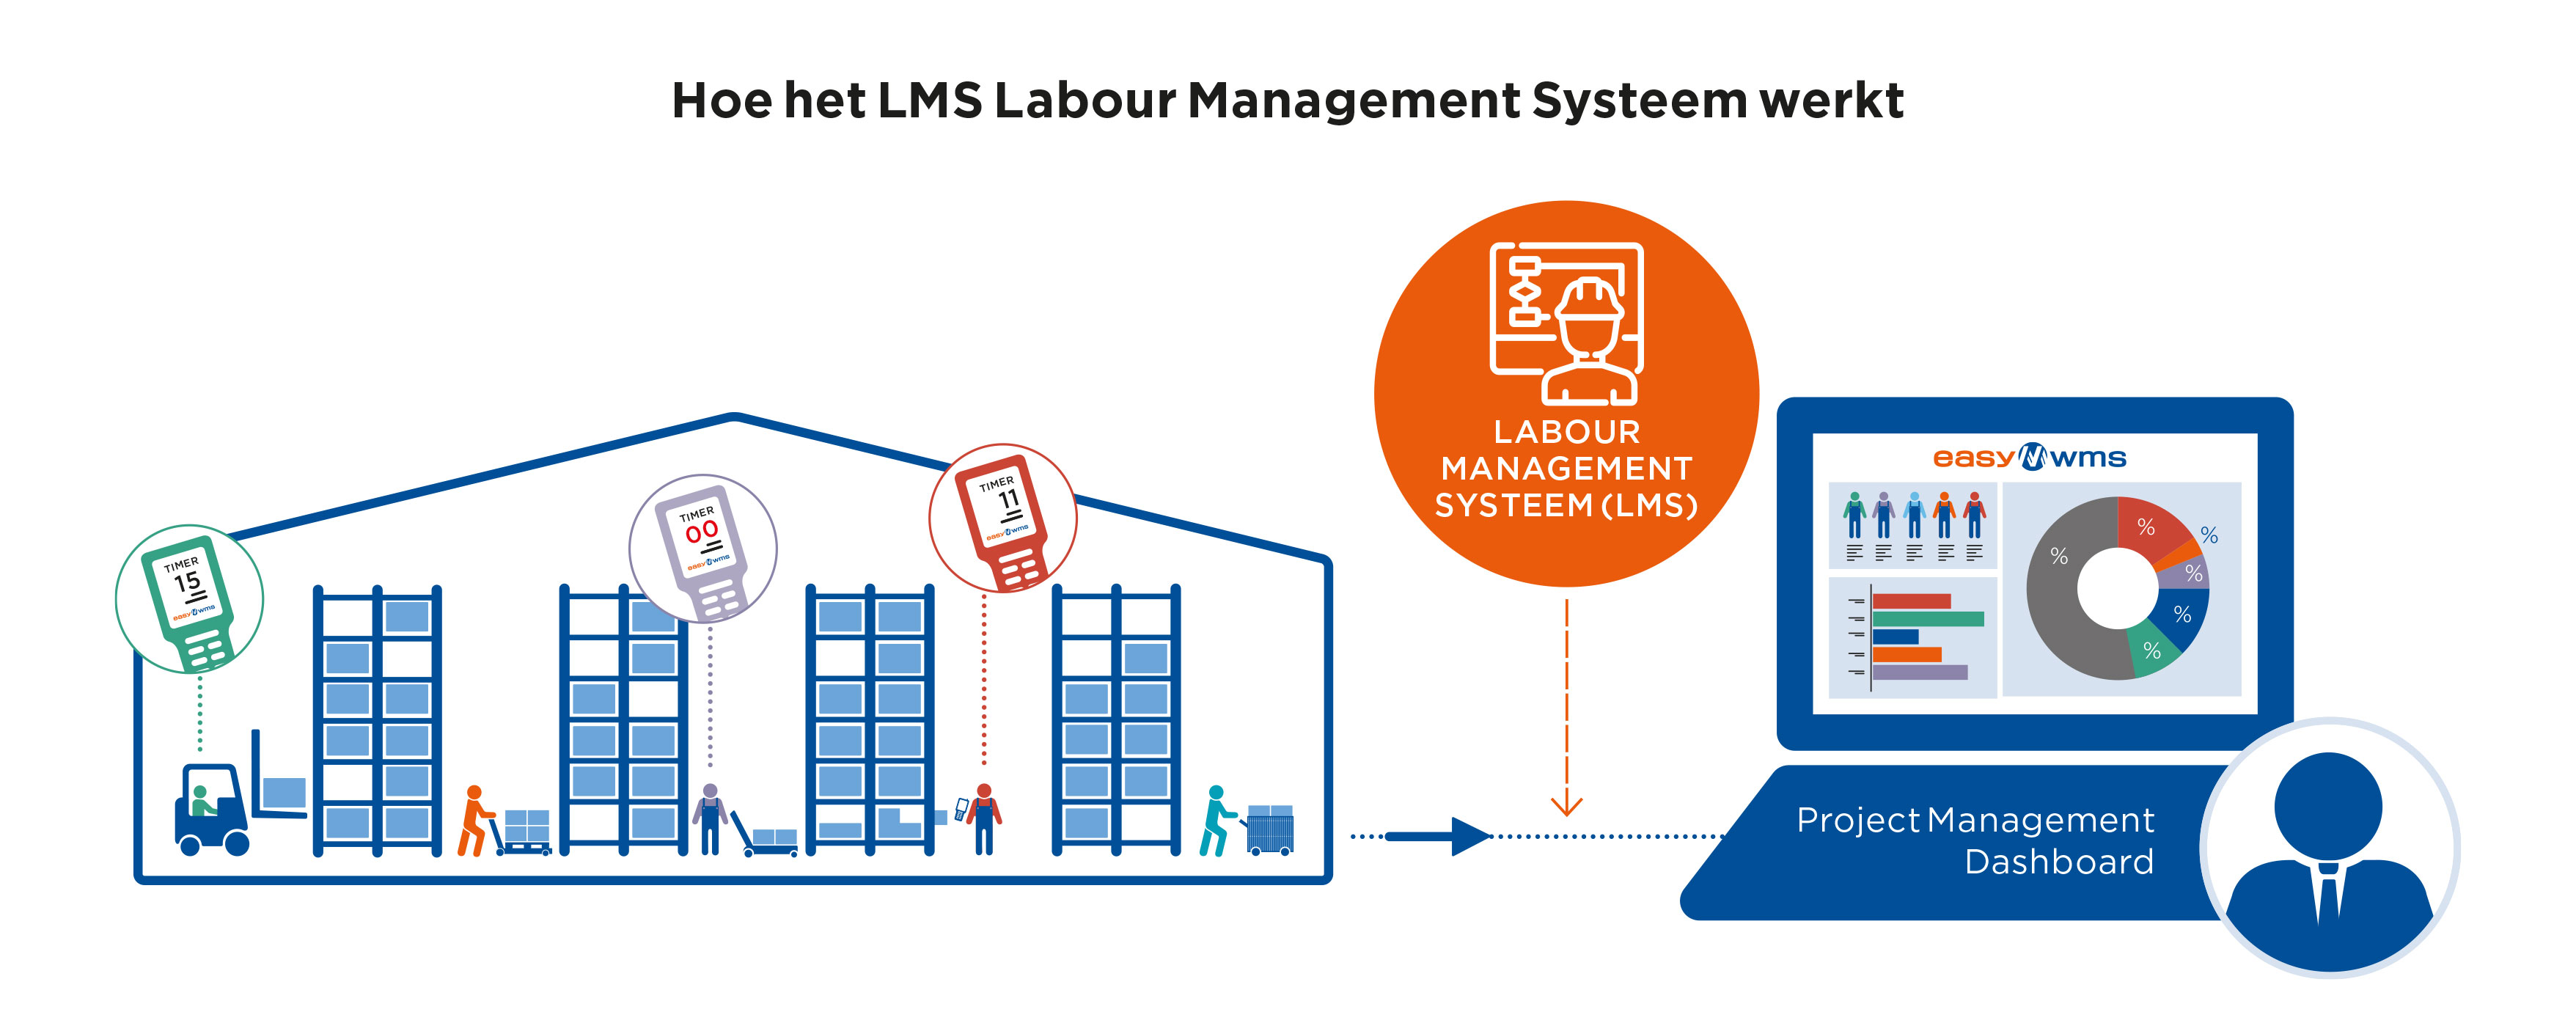 Hoe het Labor Management Systeem (LMS) werkt